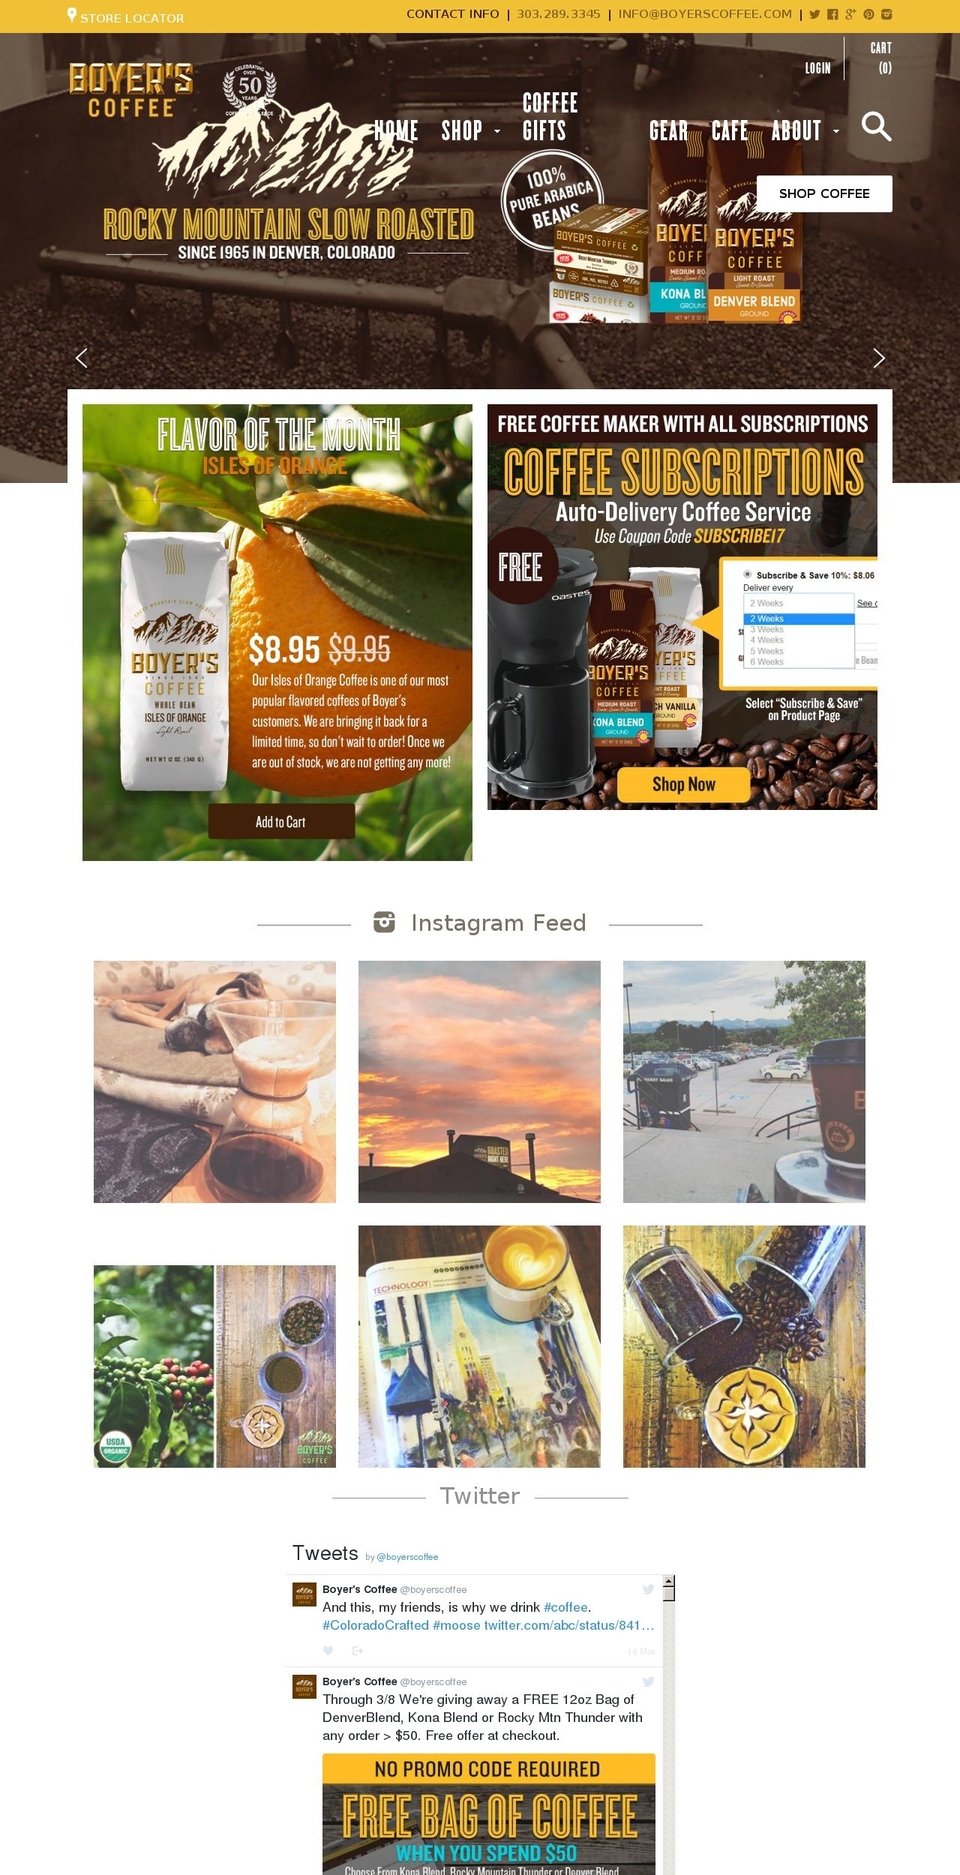 boyerscoffee.com shopify website screenshot